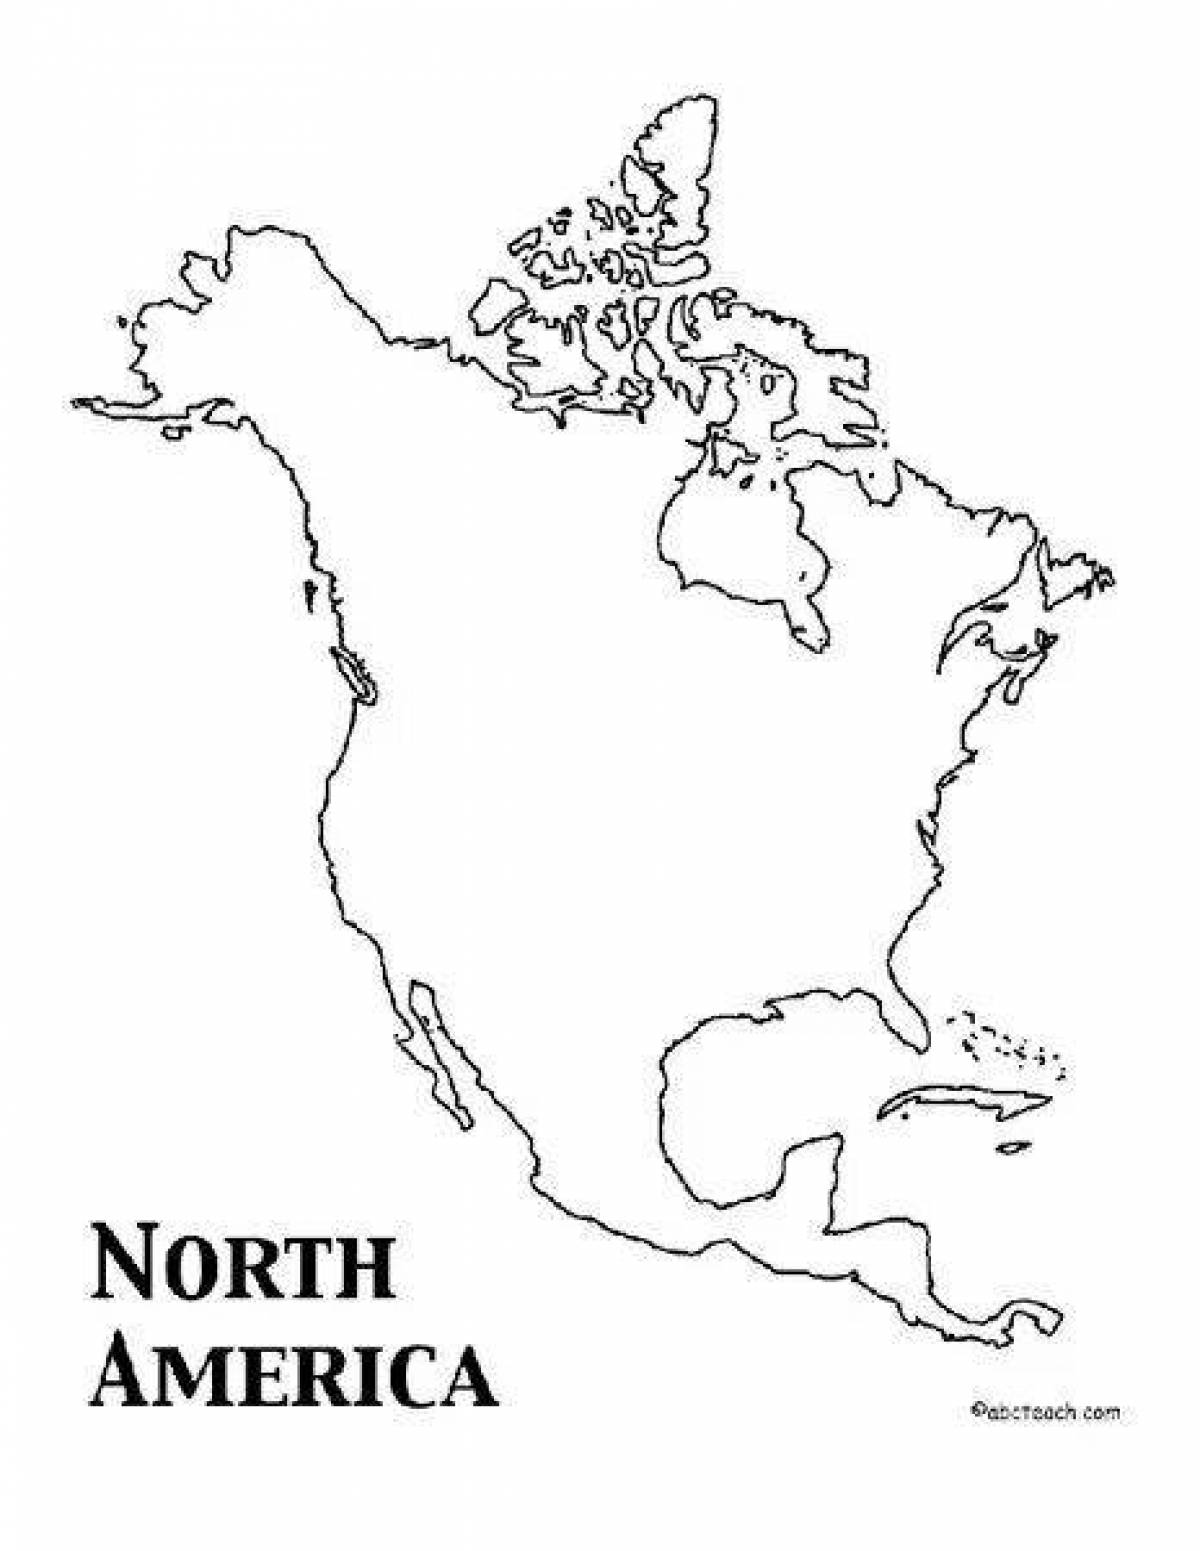 North America coloring book